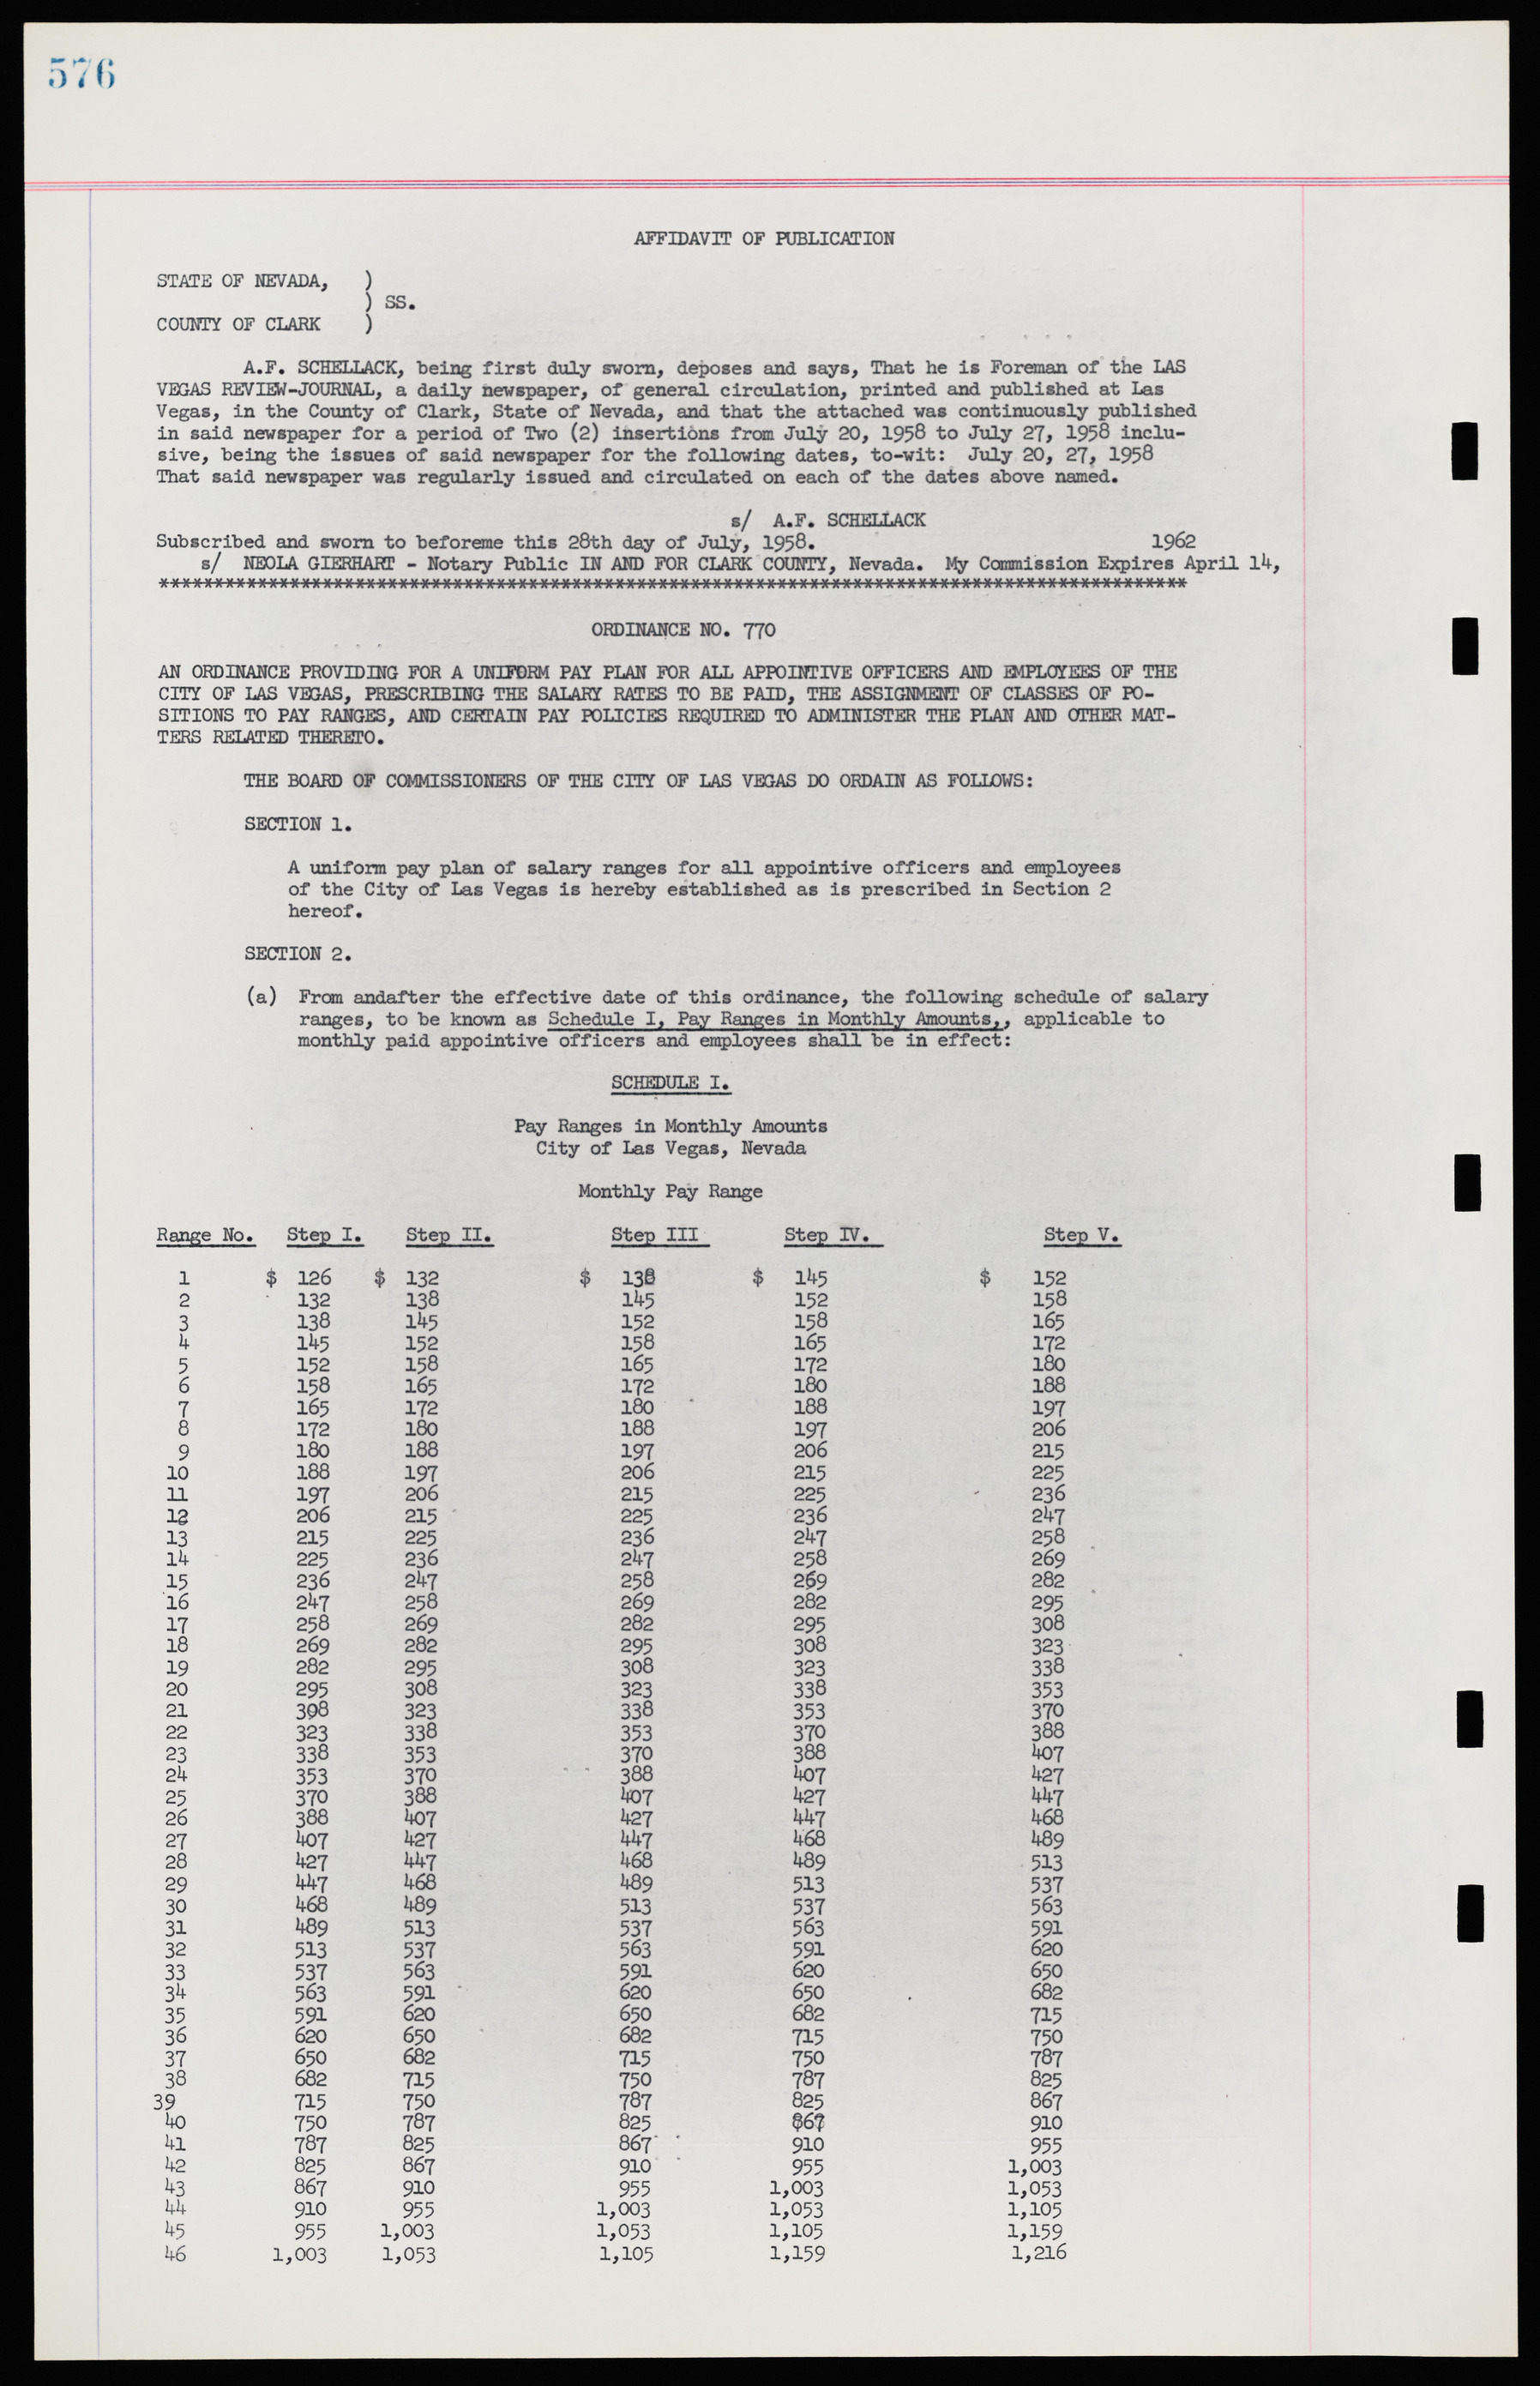 Las Vegas City Ordinances, November 13, 1950 to August 6, 1958, lvc000015-584